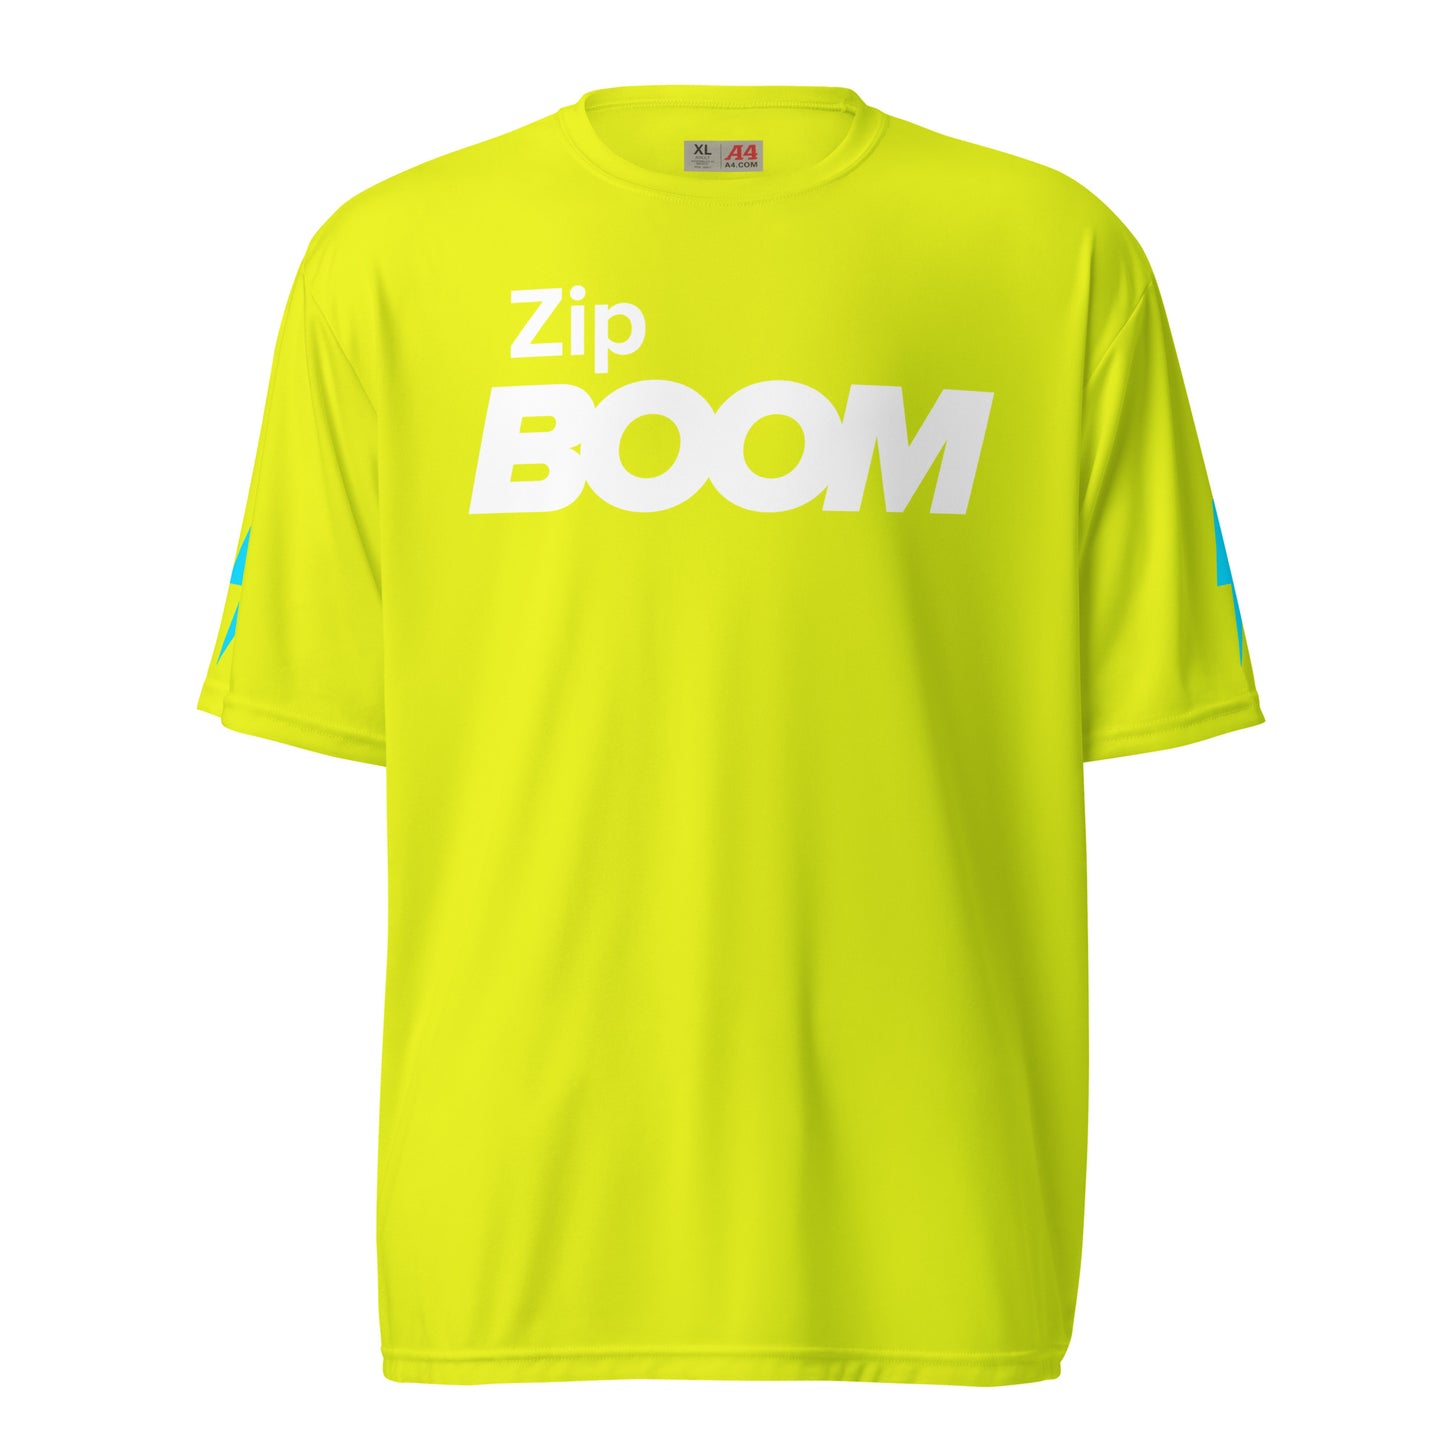 ZipBOOM Unisex performance crew neck t-shirt